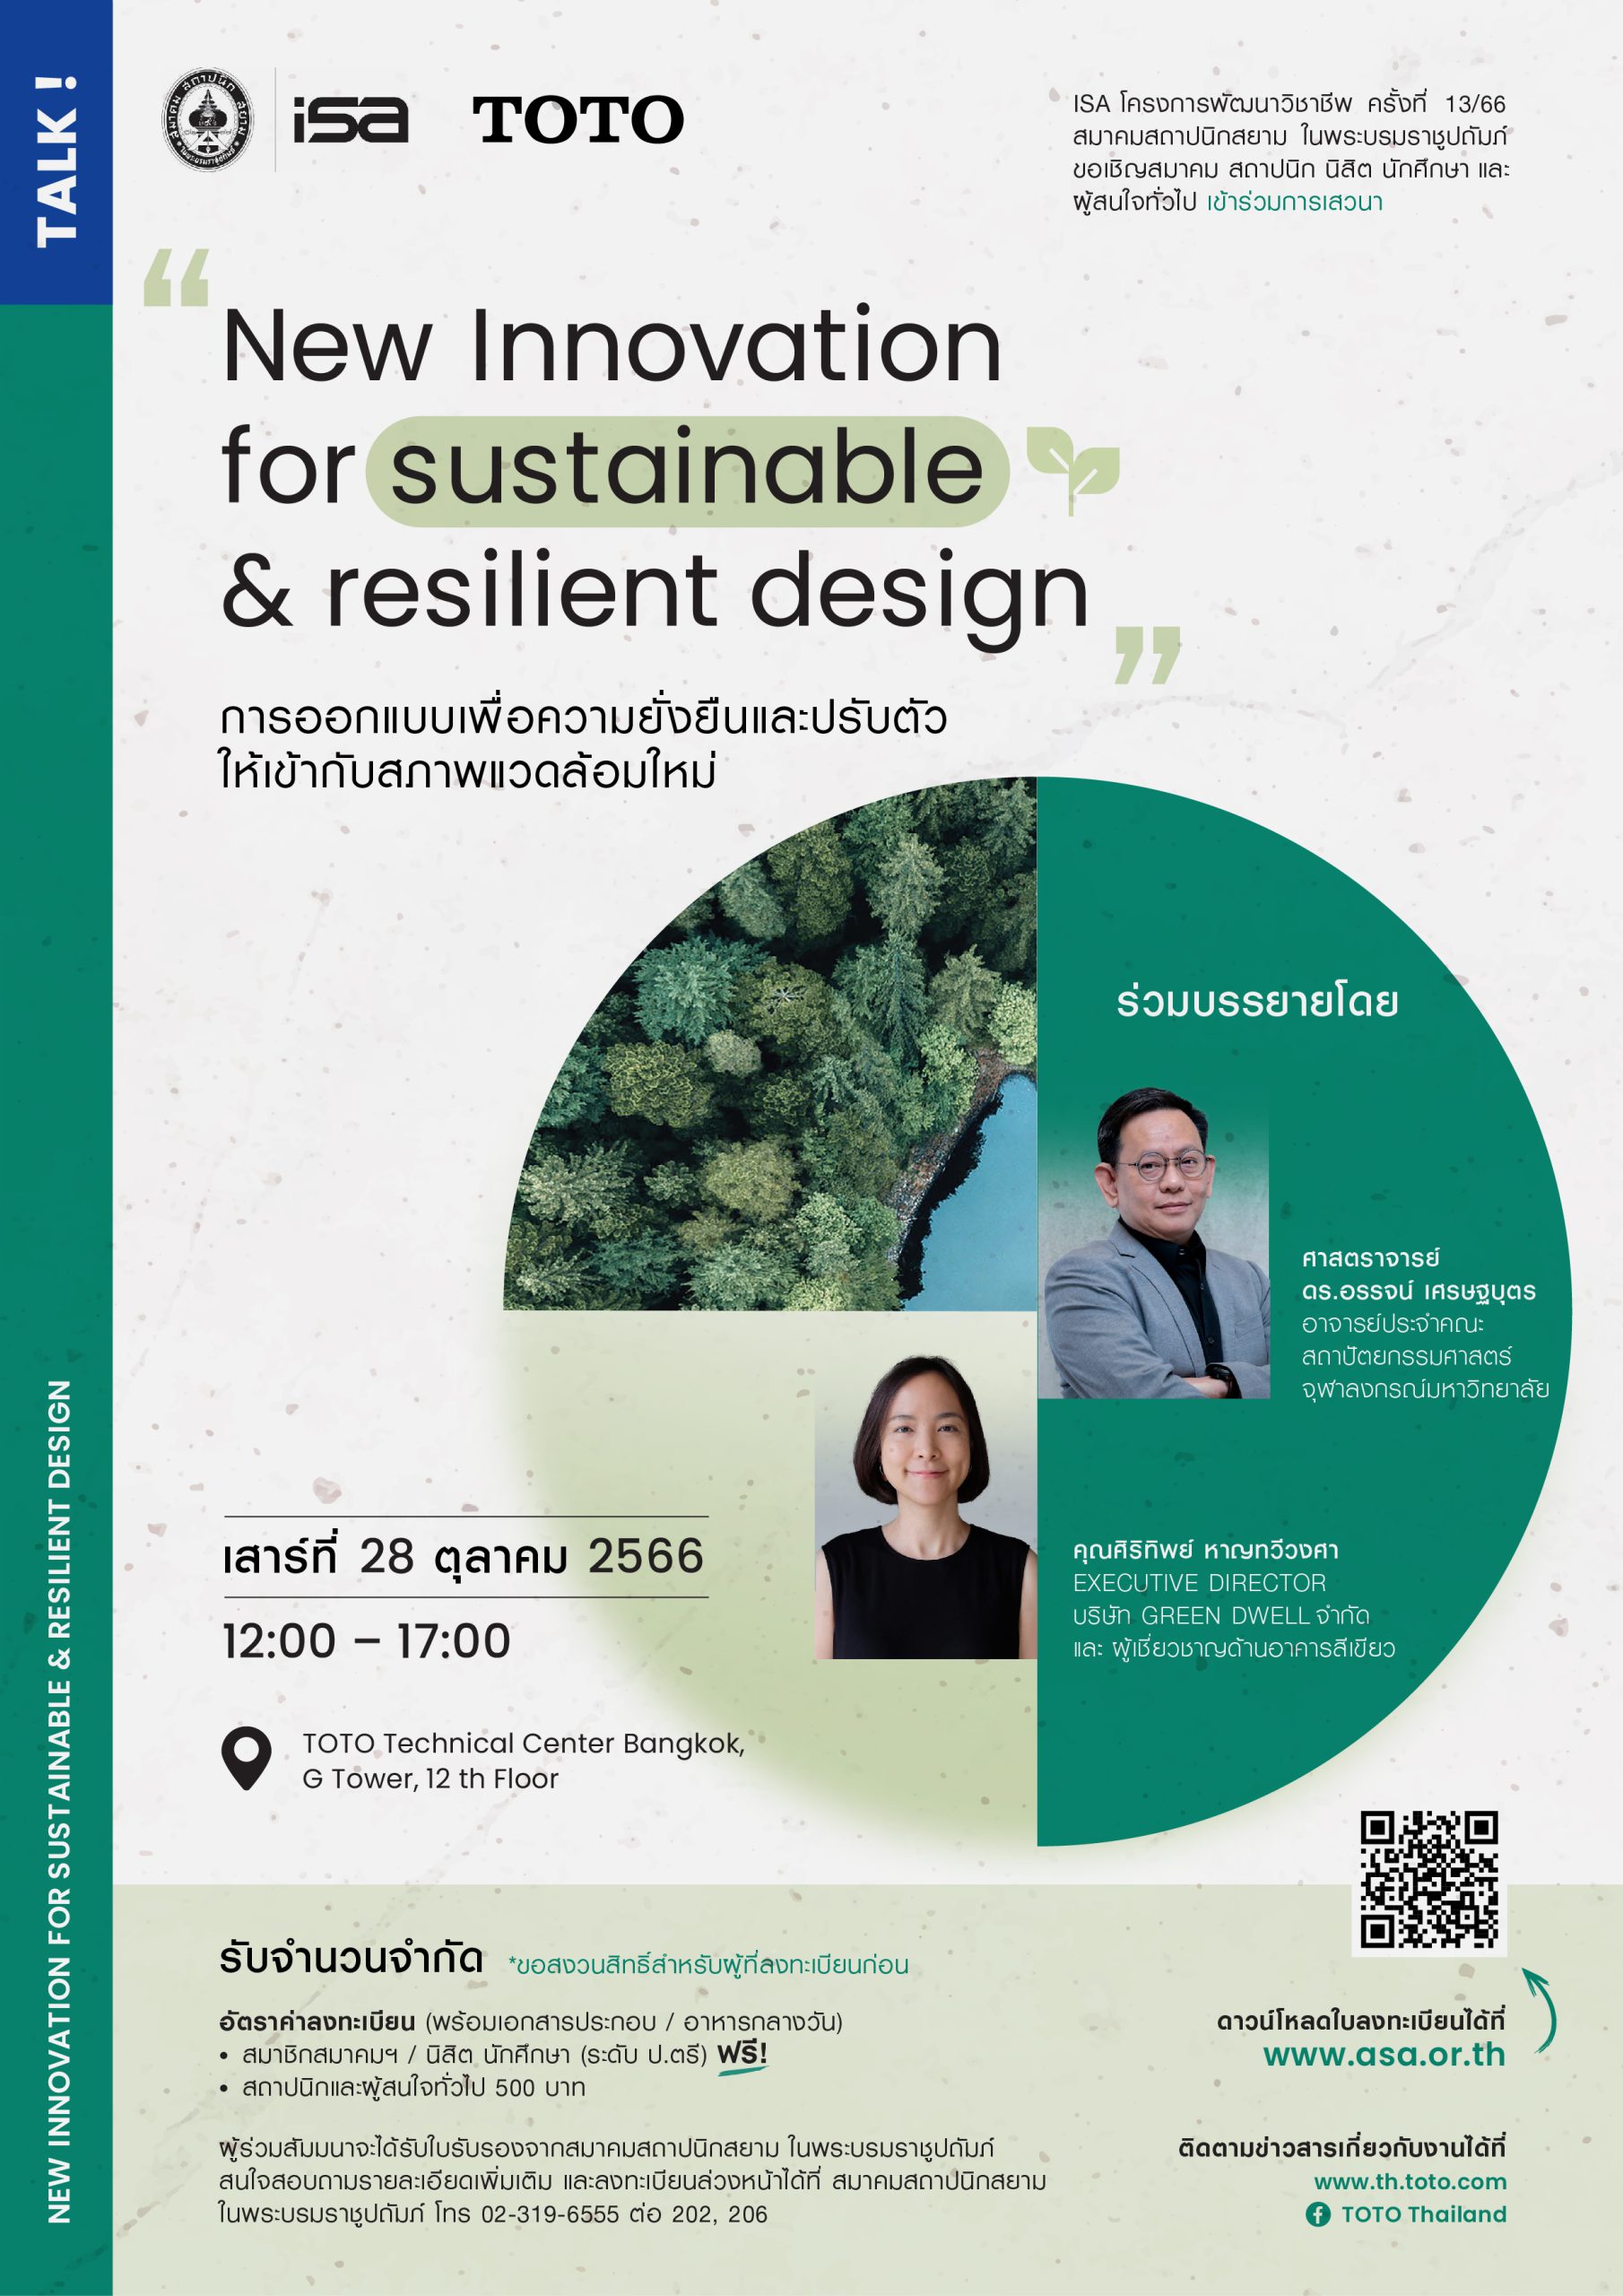 New Innovation for sustainable and resilient design : การออกแบบเพื่อความยั่งยืนและปรับตัวให้เข้ากับสภาพแวดล้อมใหม่